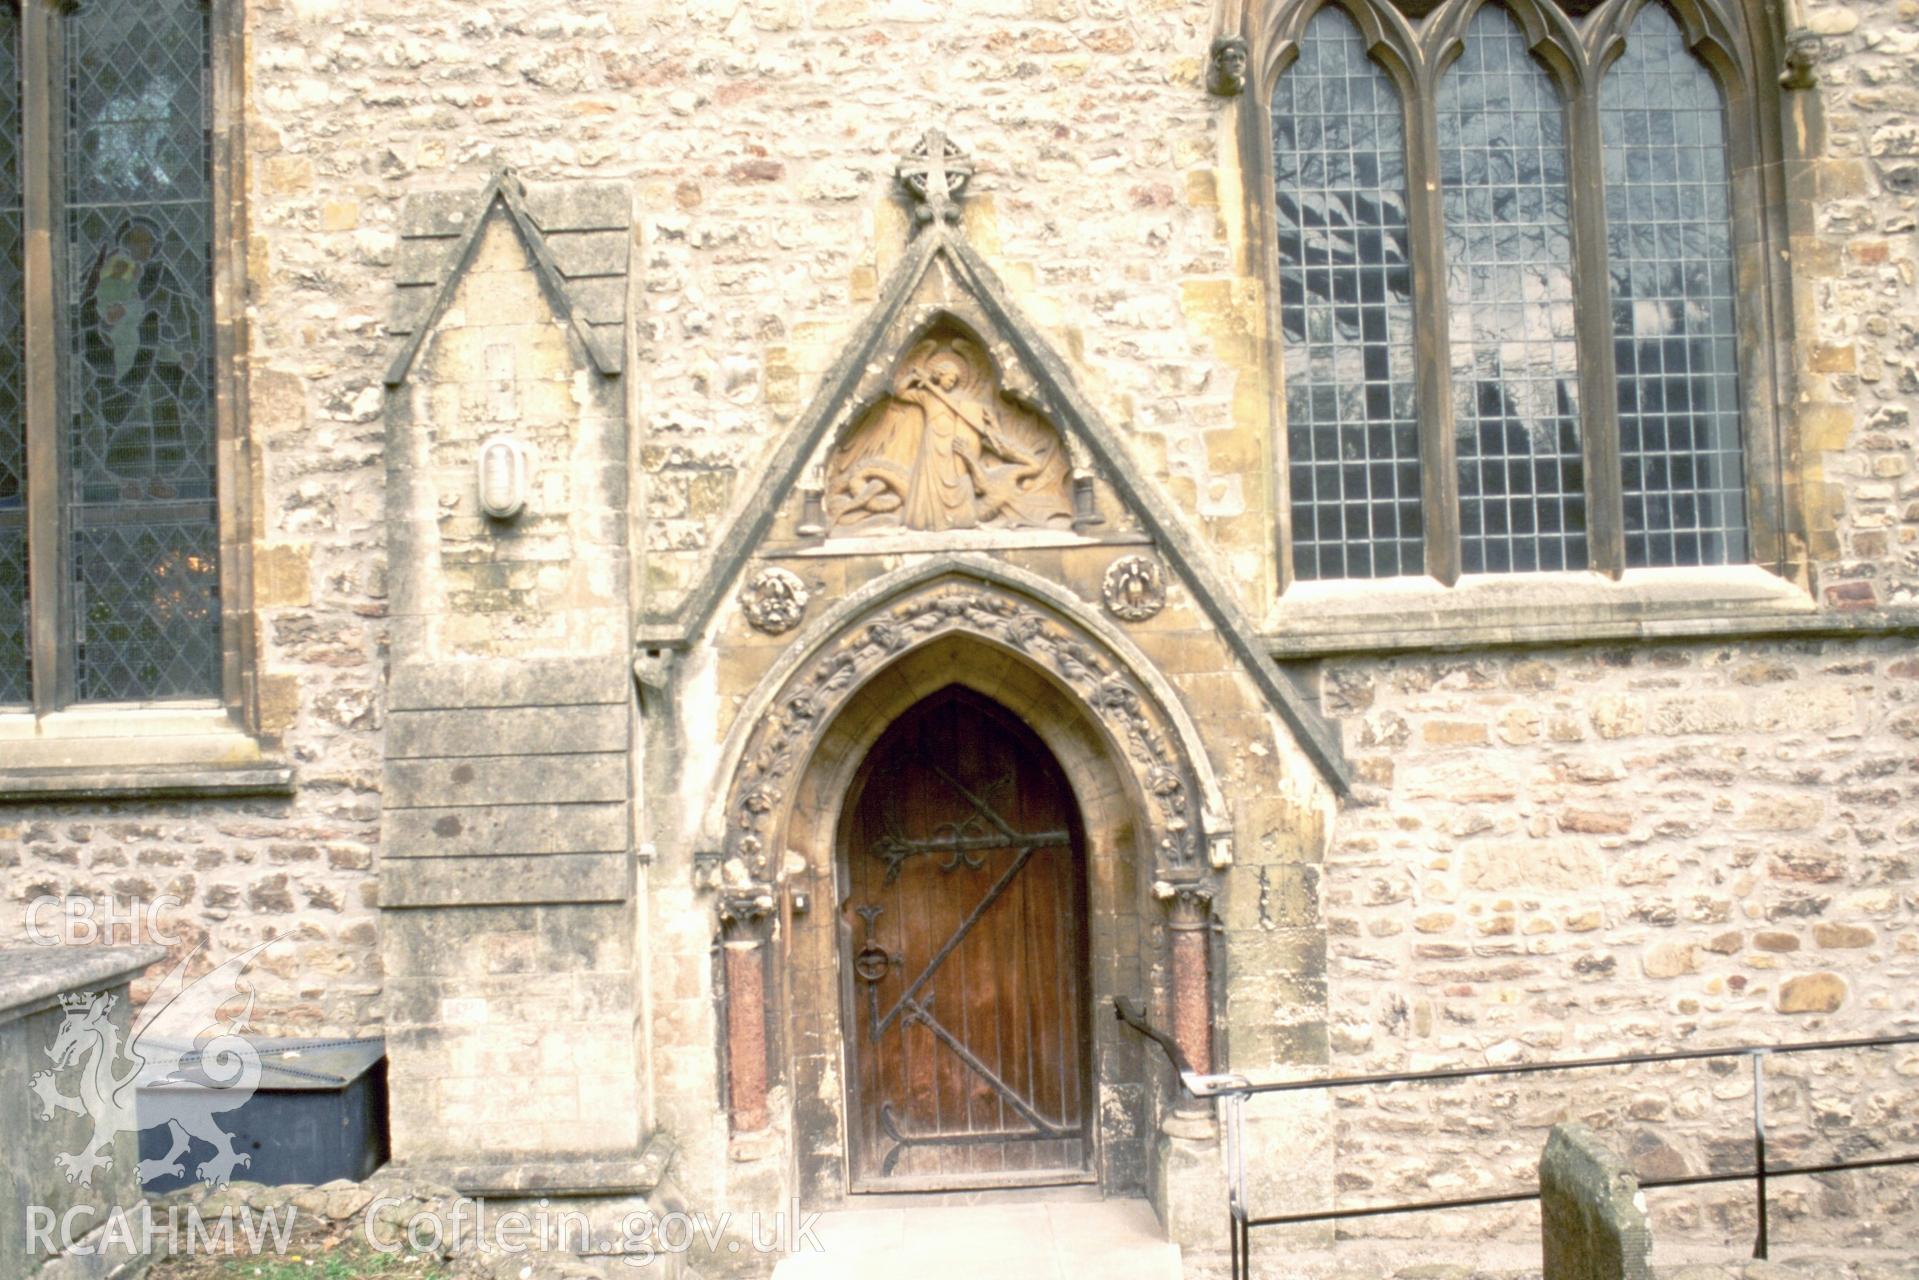 Exterior, S. choir aisle door (closer view)